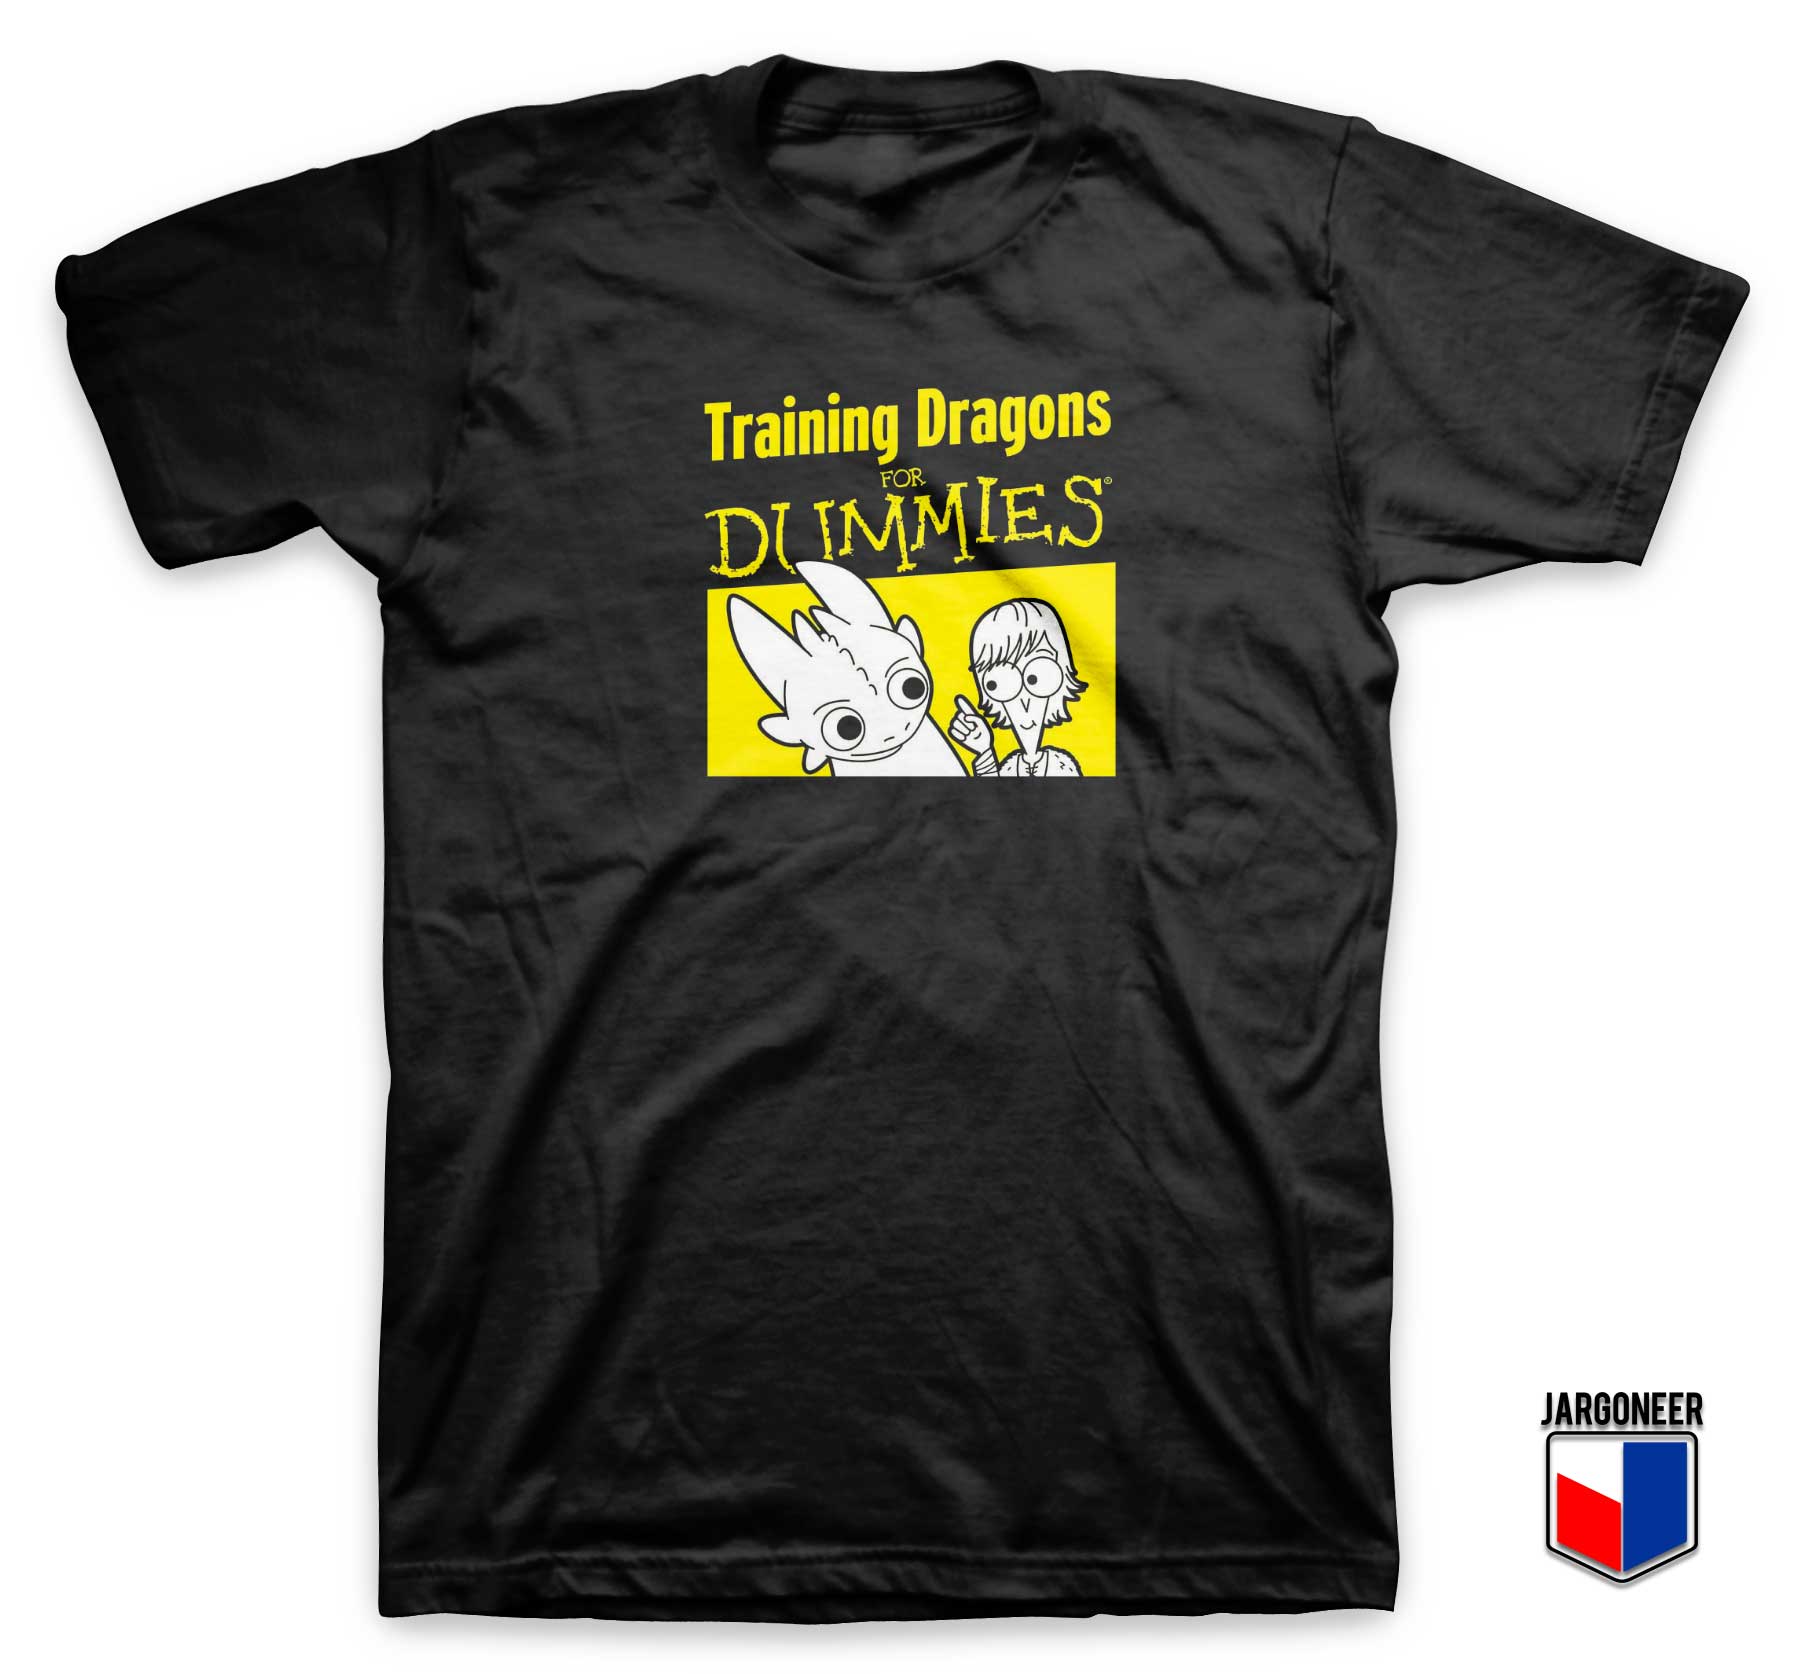 Training Dragons For Dummies T Shirt - Shop Unique Graphic Cool Shirt Designs